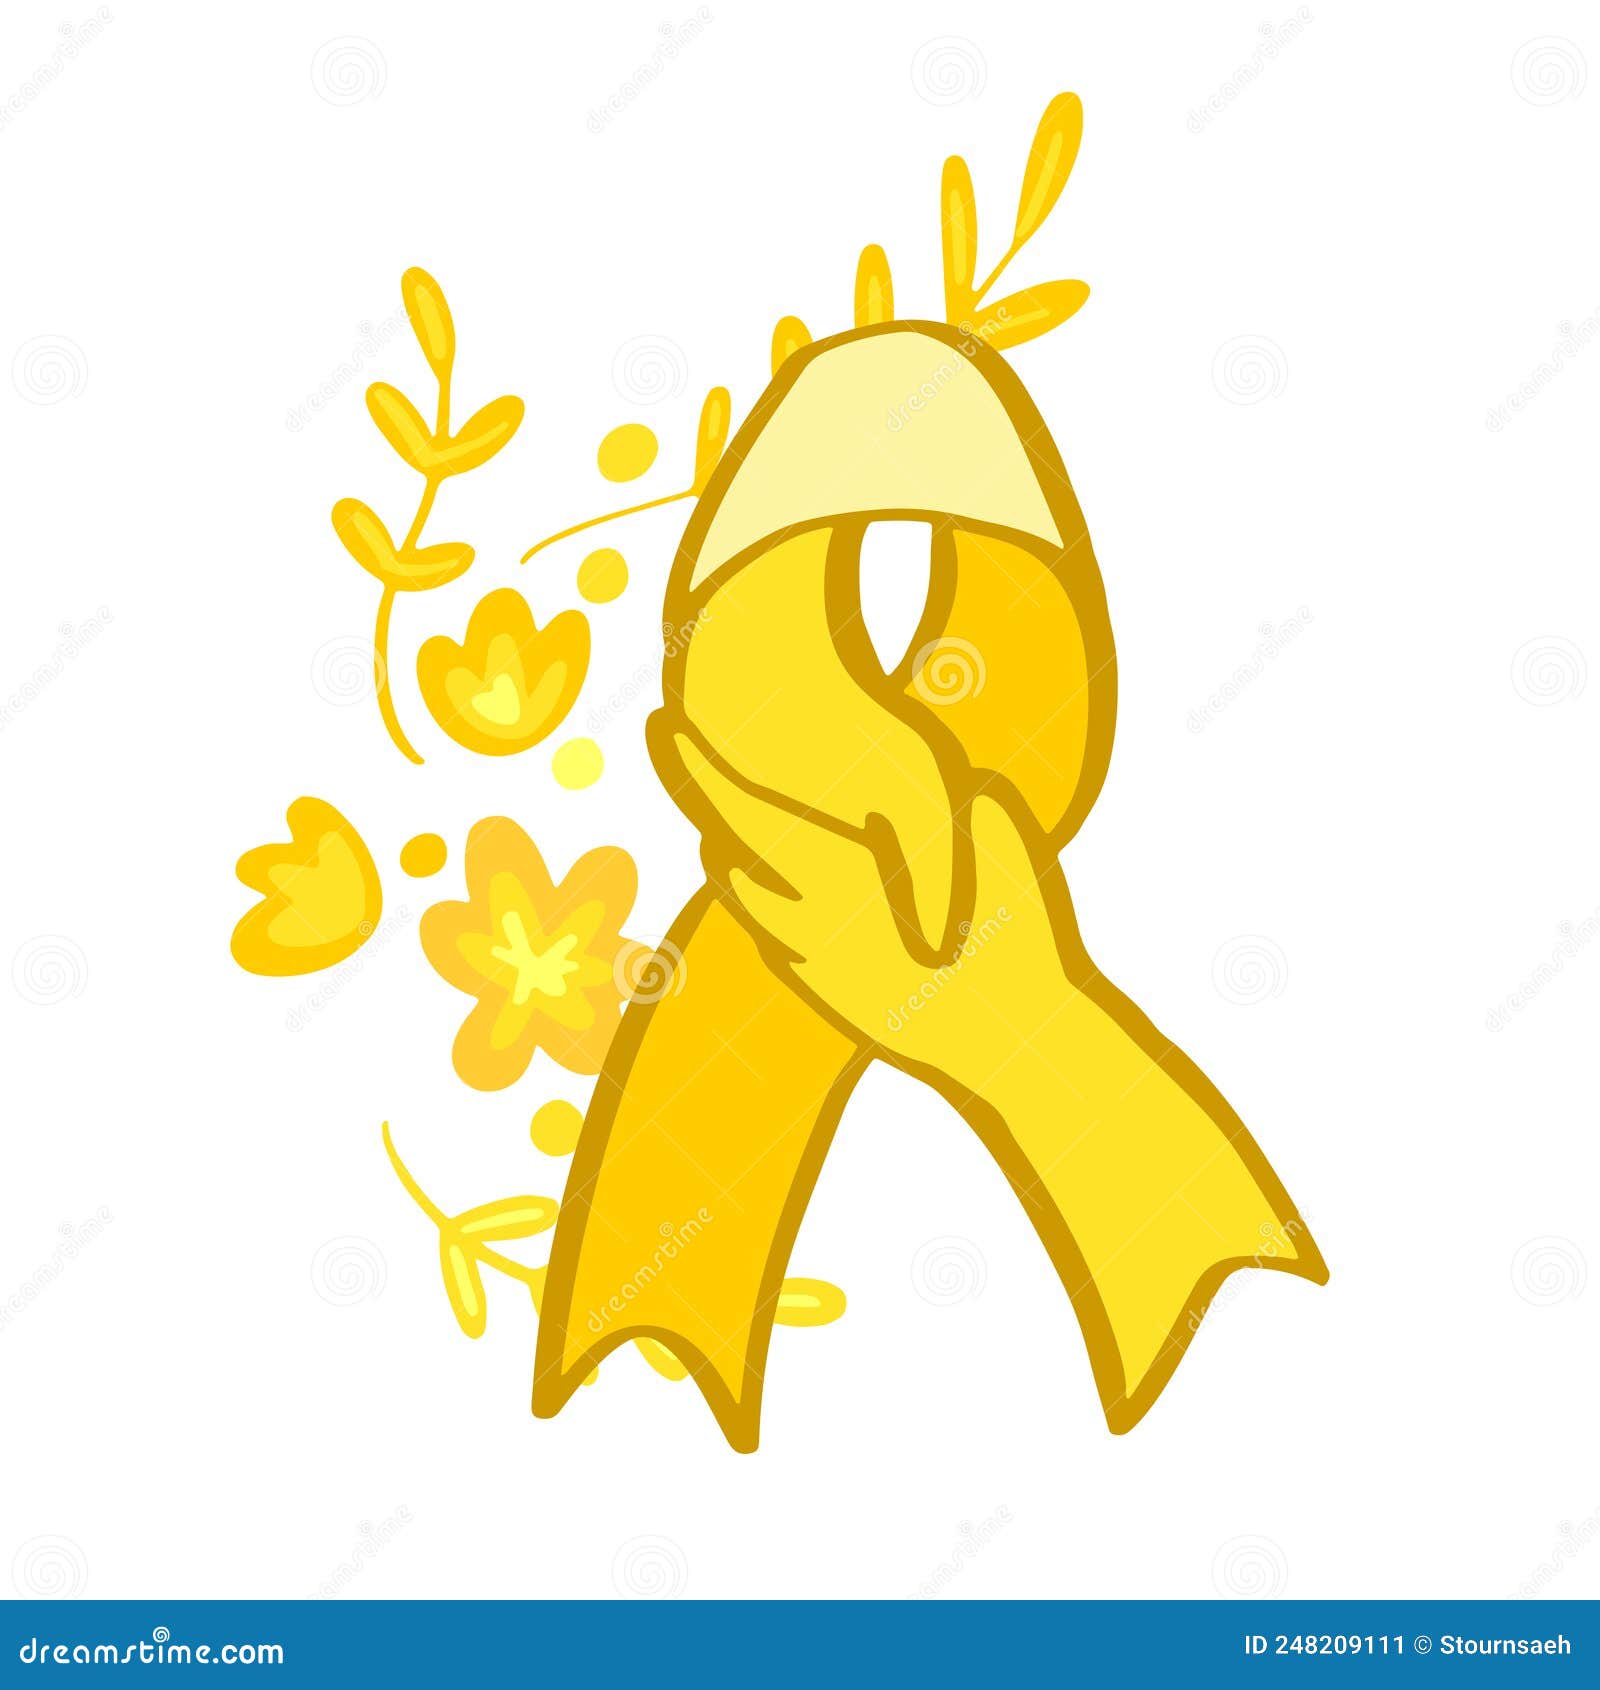 setembro amarelo - yellow sempteber in portuguese, brazillian, suicide prevention month. ribbon support and awareness